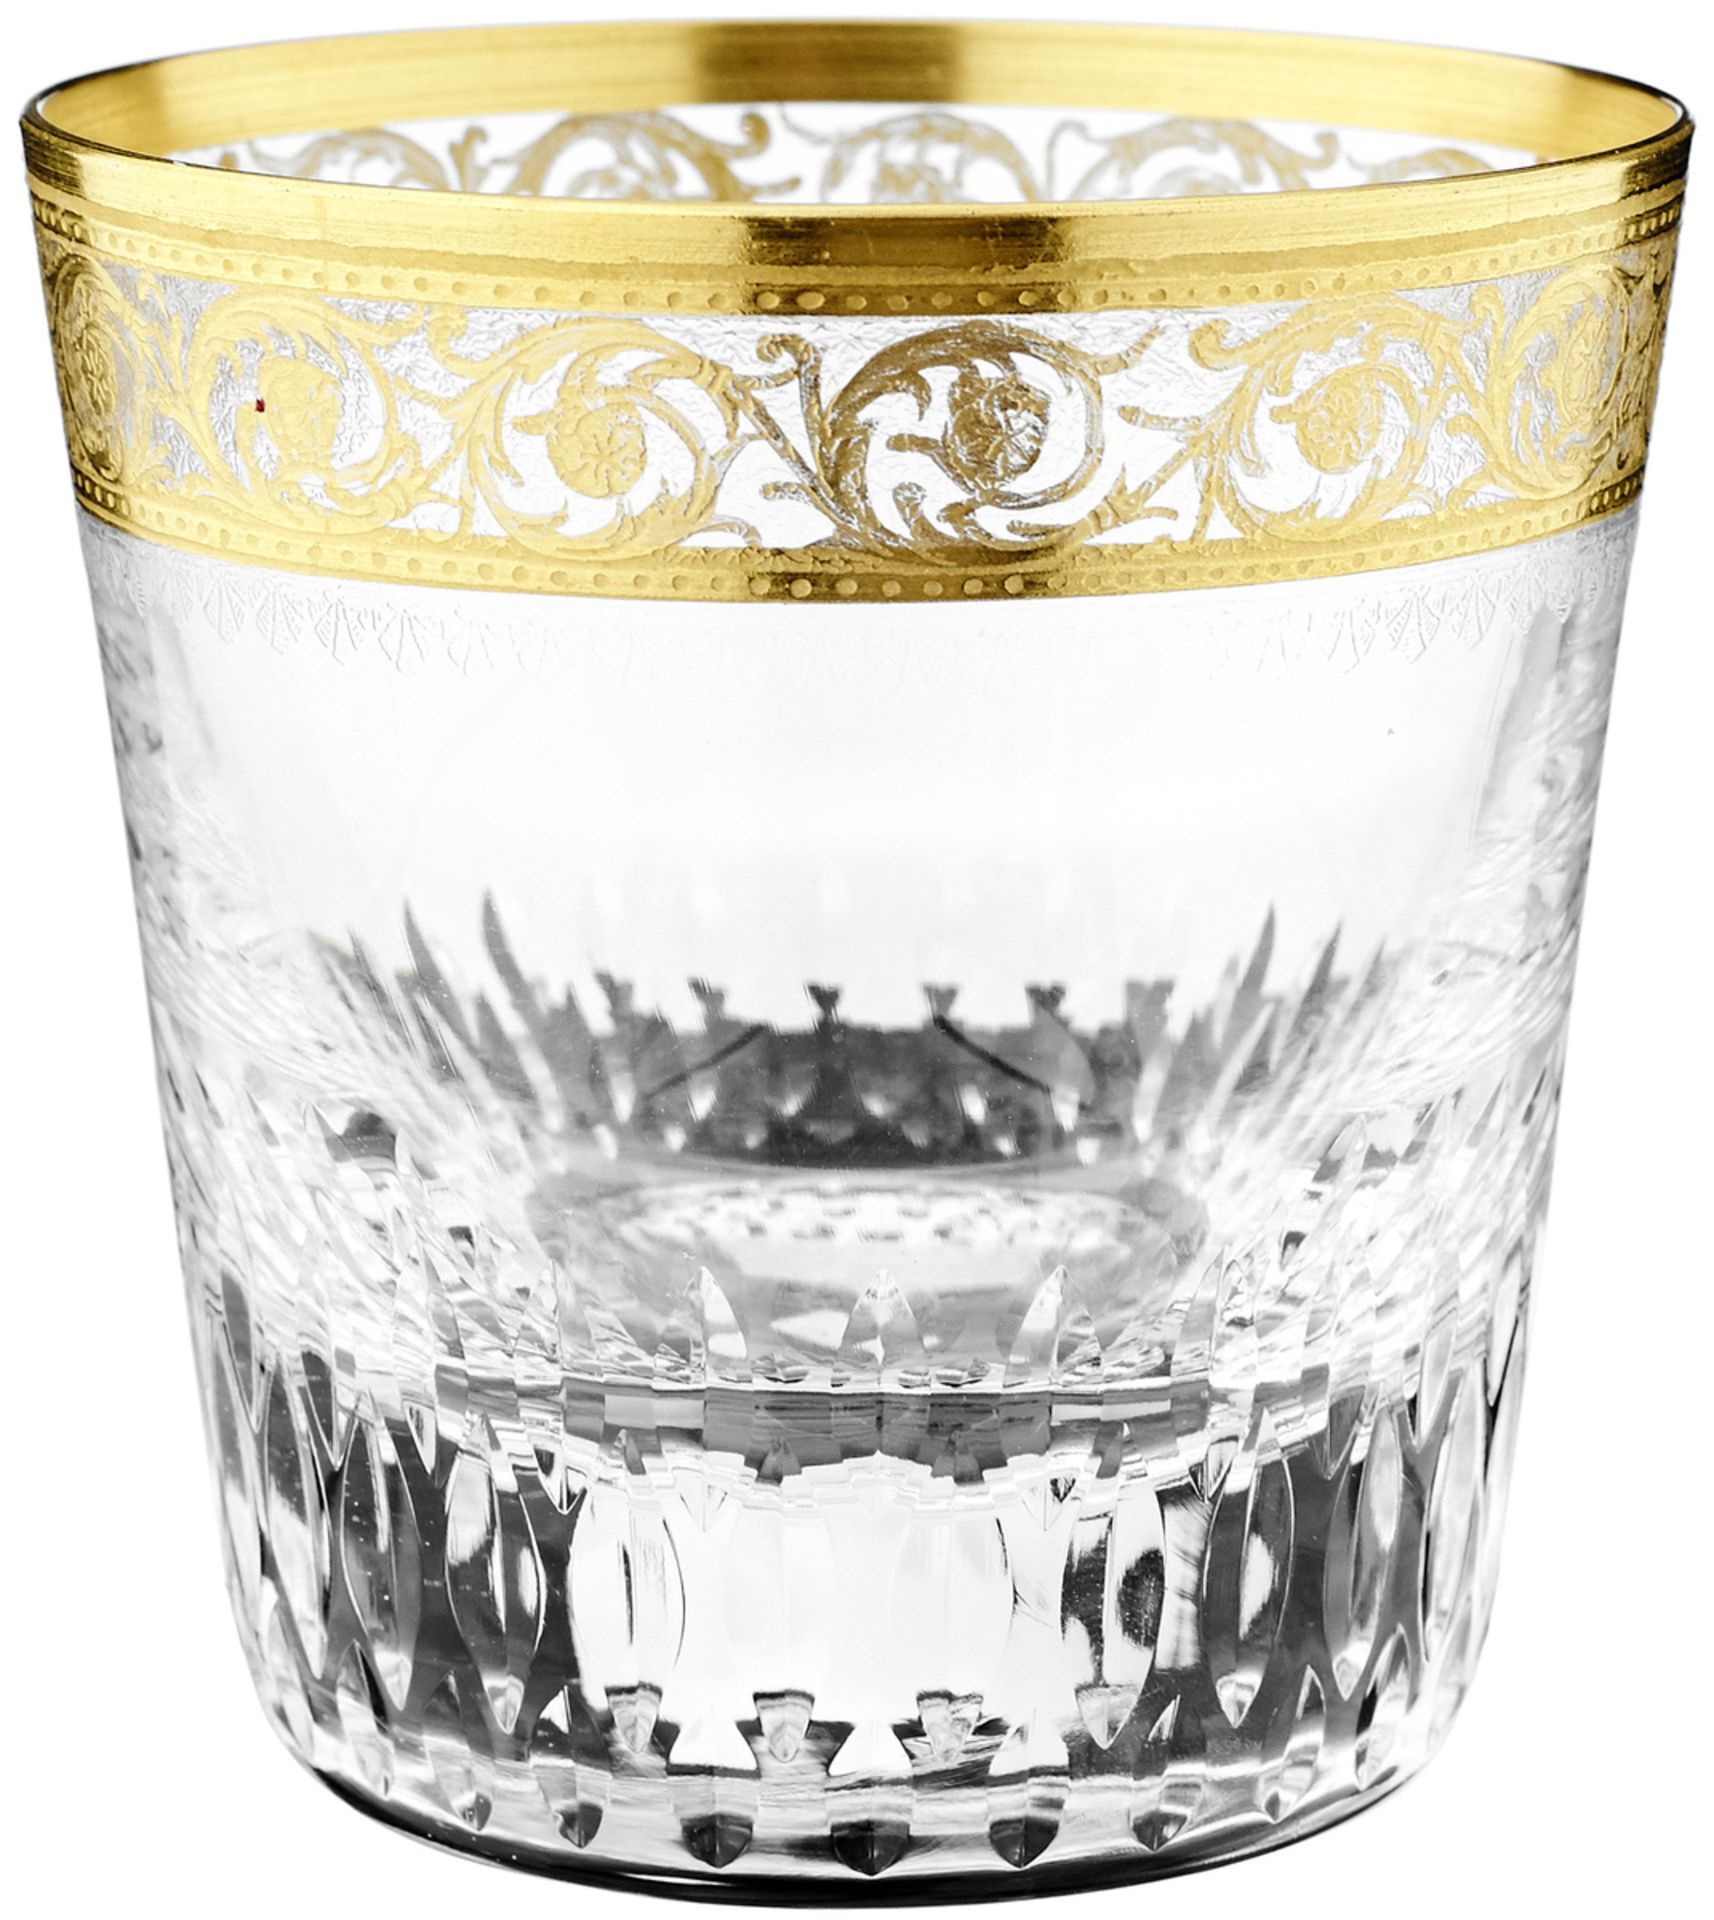 6 Whisky-Tumbler "Thistle"St. Louis. Modell "Thistle". Farbloses Kristallglas mit Zierschliff. - Bild 3 aus 3